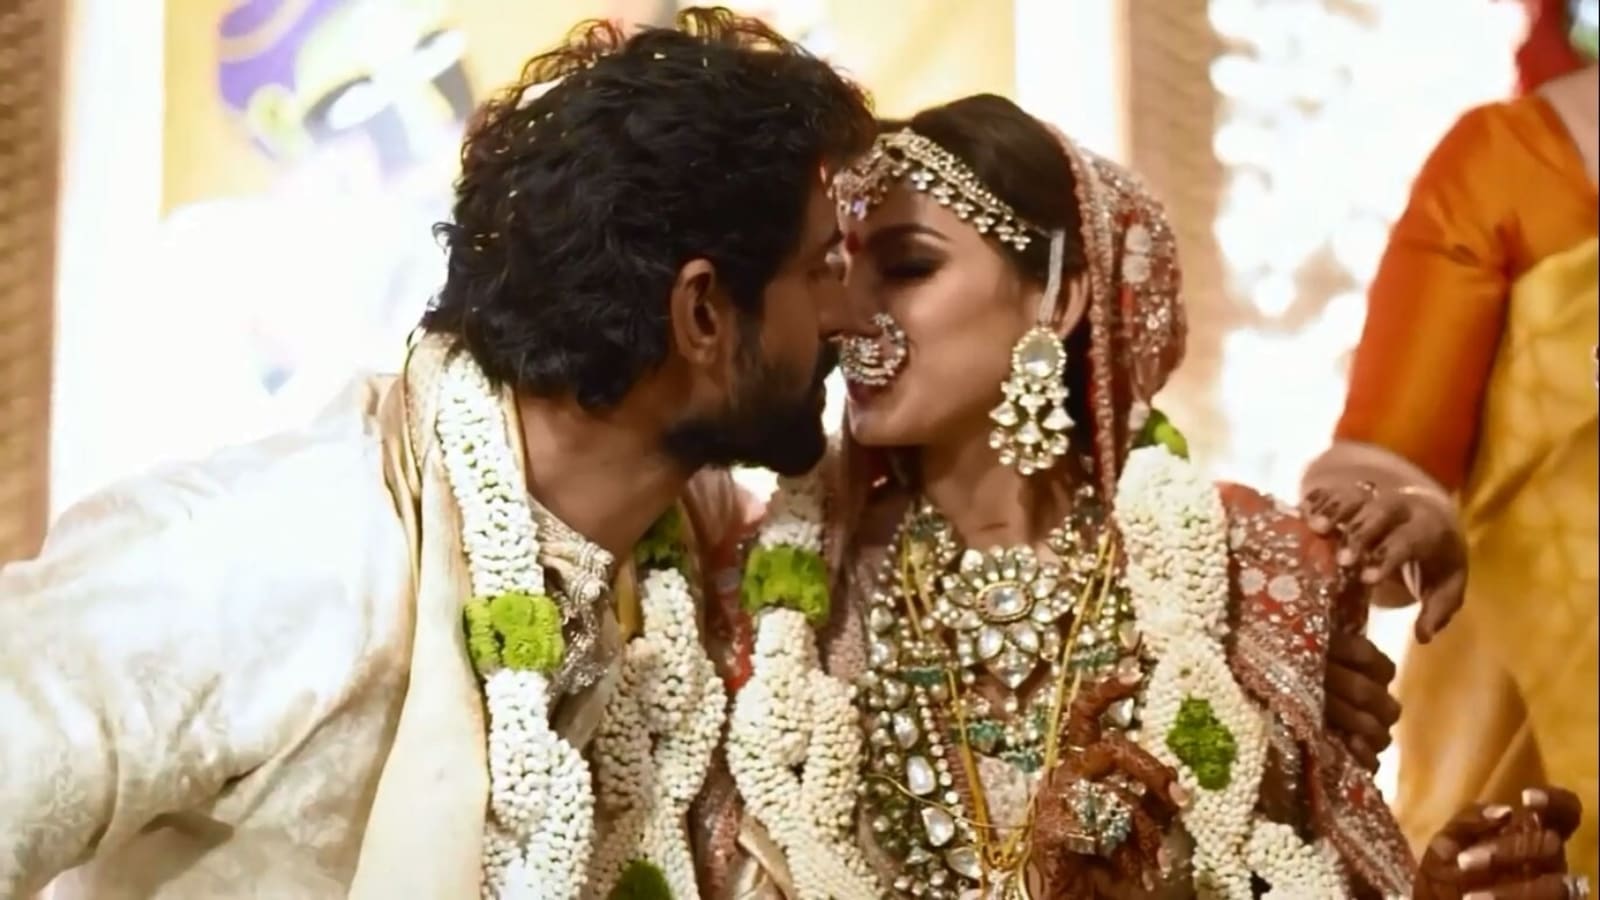 Rana Daggubati Stole A Quick Kiss As He Married Miheeka Bajaj Watch Wedding Video Shared By Her